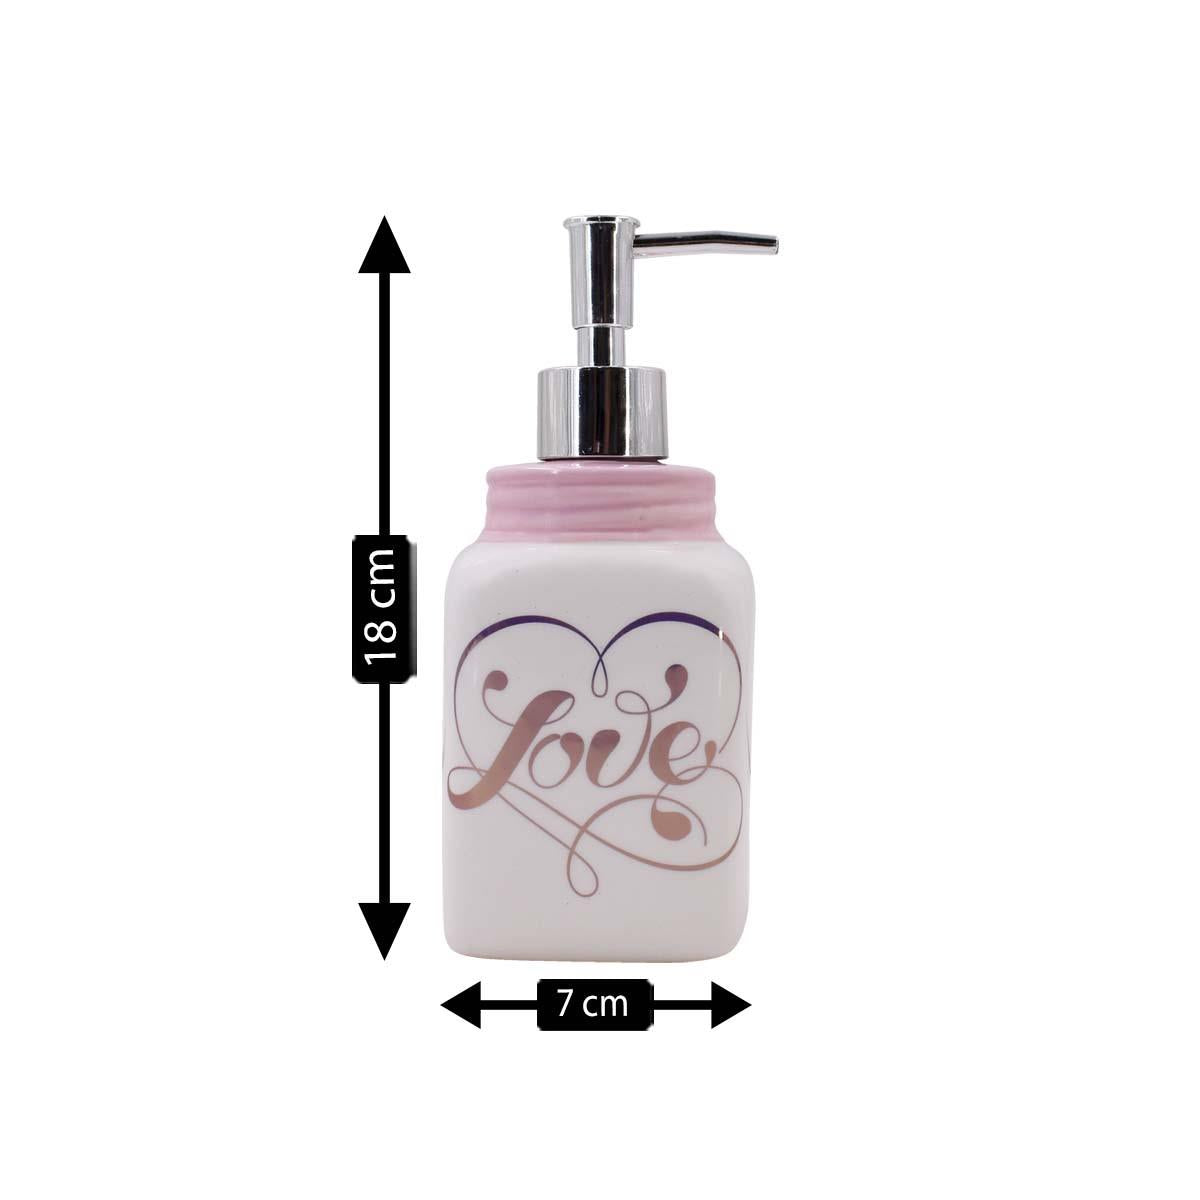 Ceramic Soap Dispenser Pump for Bathroom for Bath Gel, Lotion, Shampoo (9651)